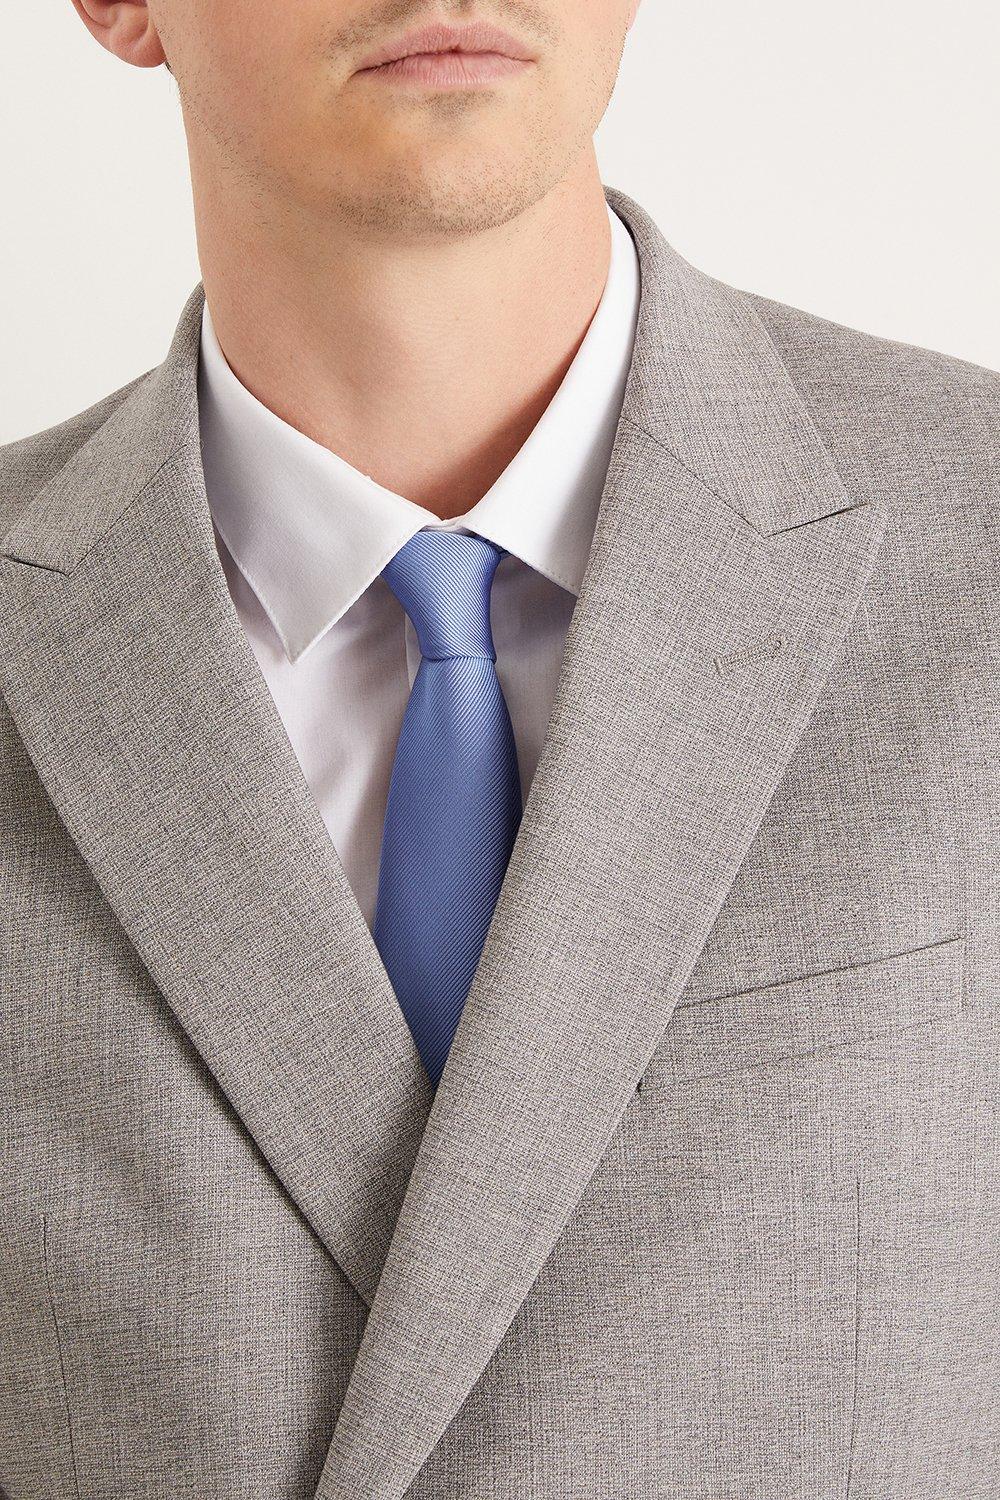 Image of Mens Light Blue Slim Tie